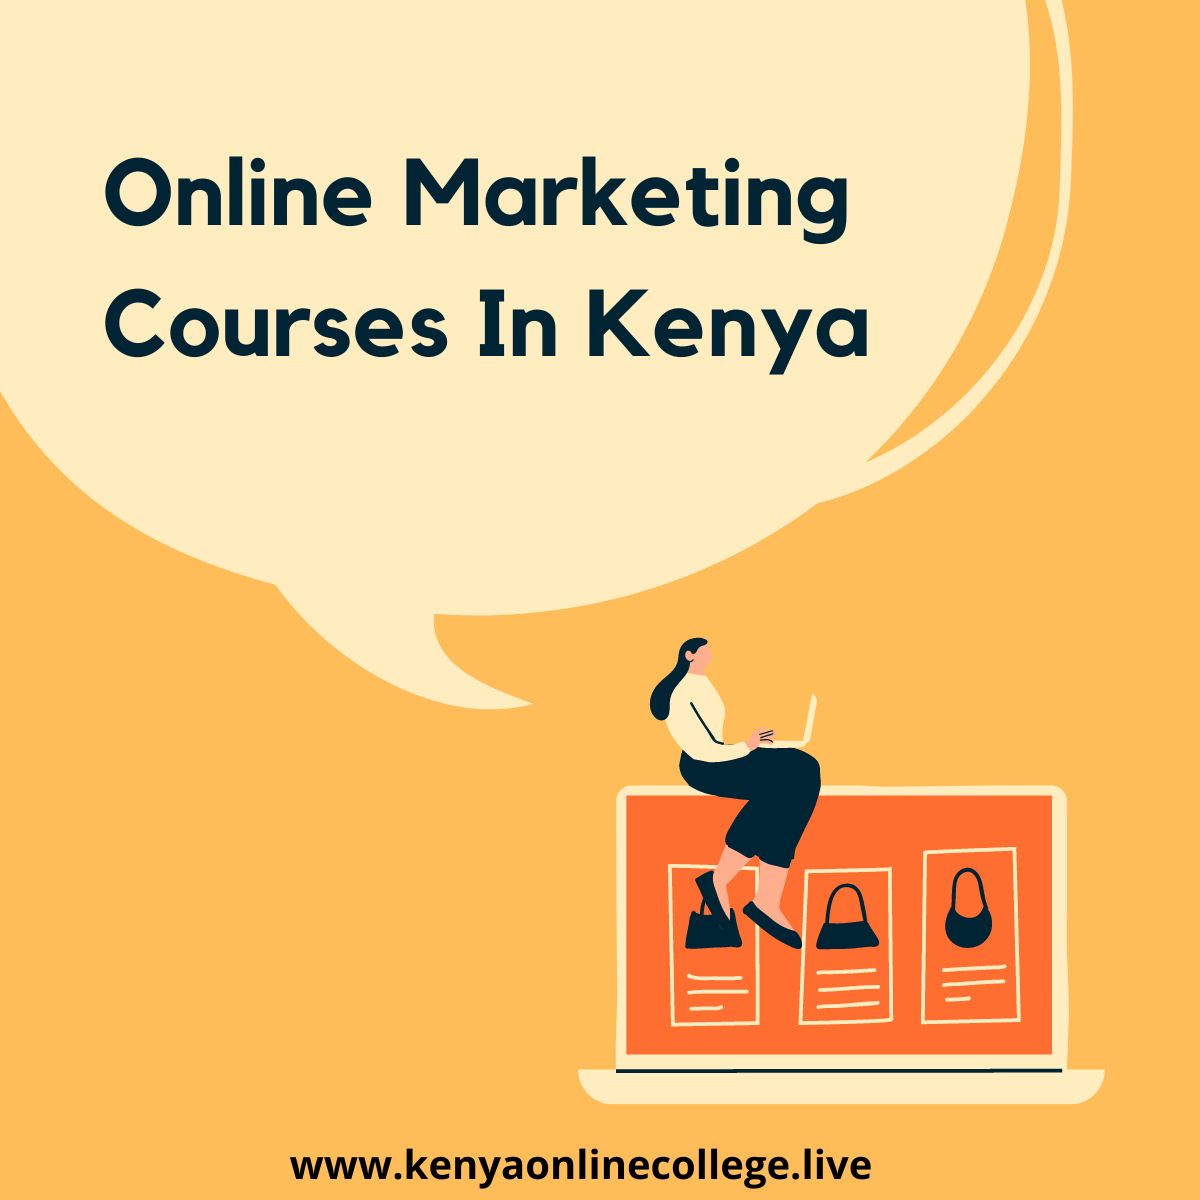 Online marketing courses in Kenya